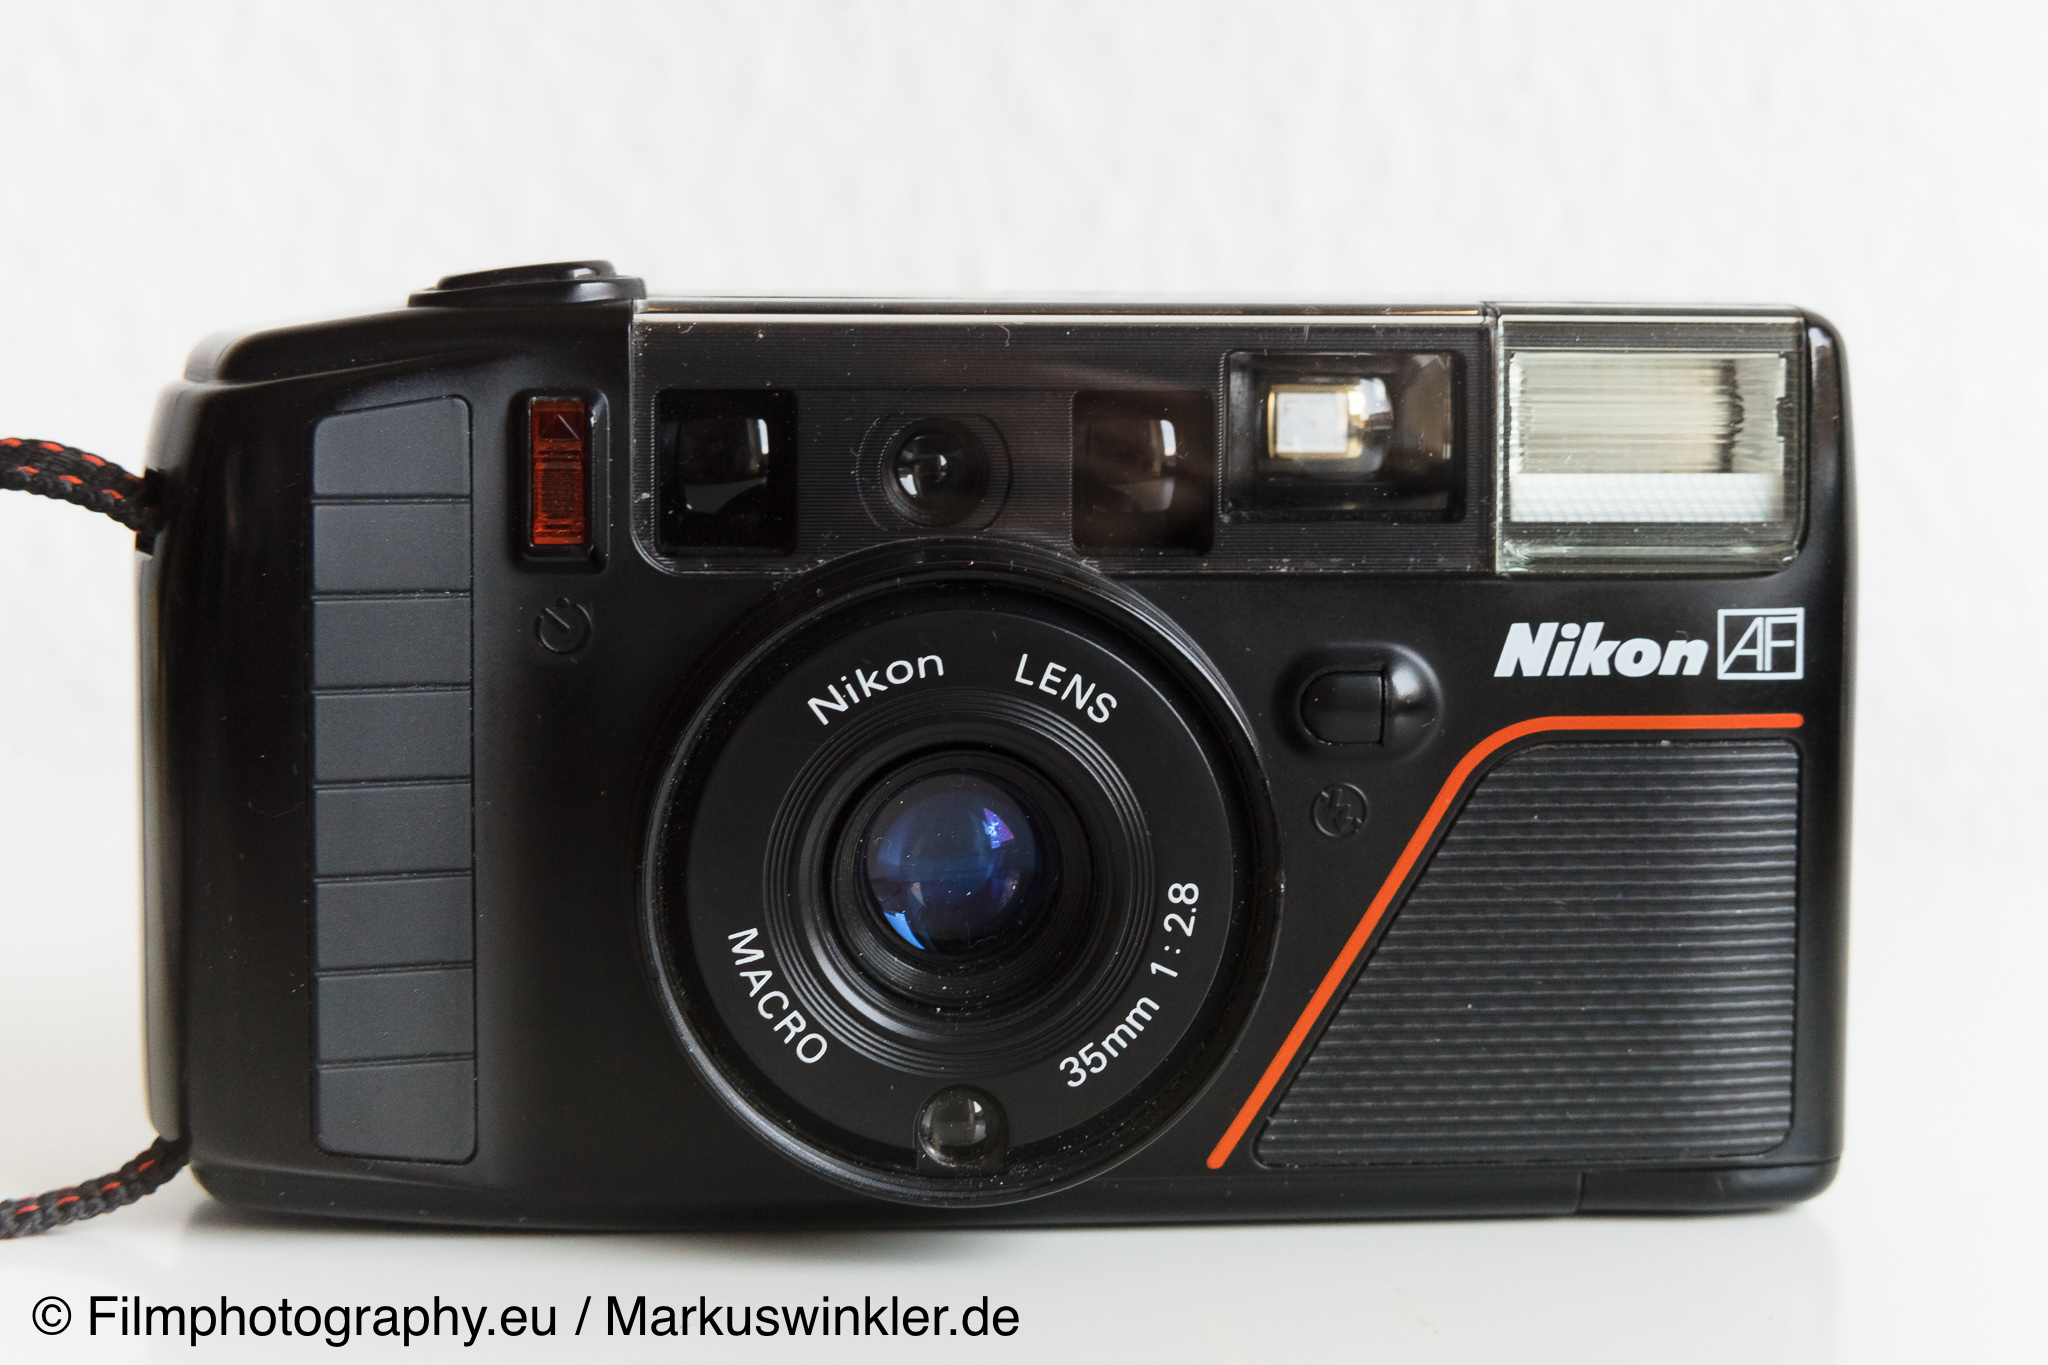 Nikon AF3 - Information about functions, battery & films